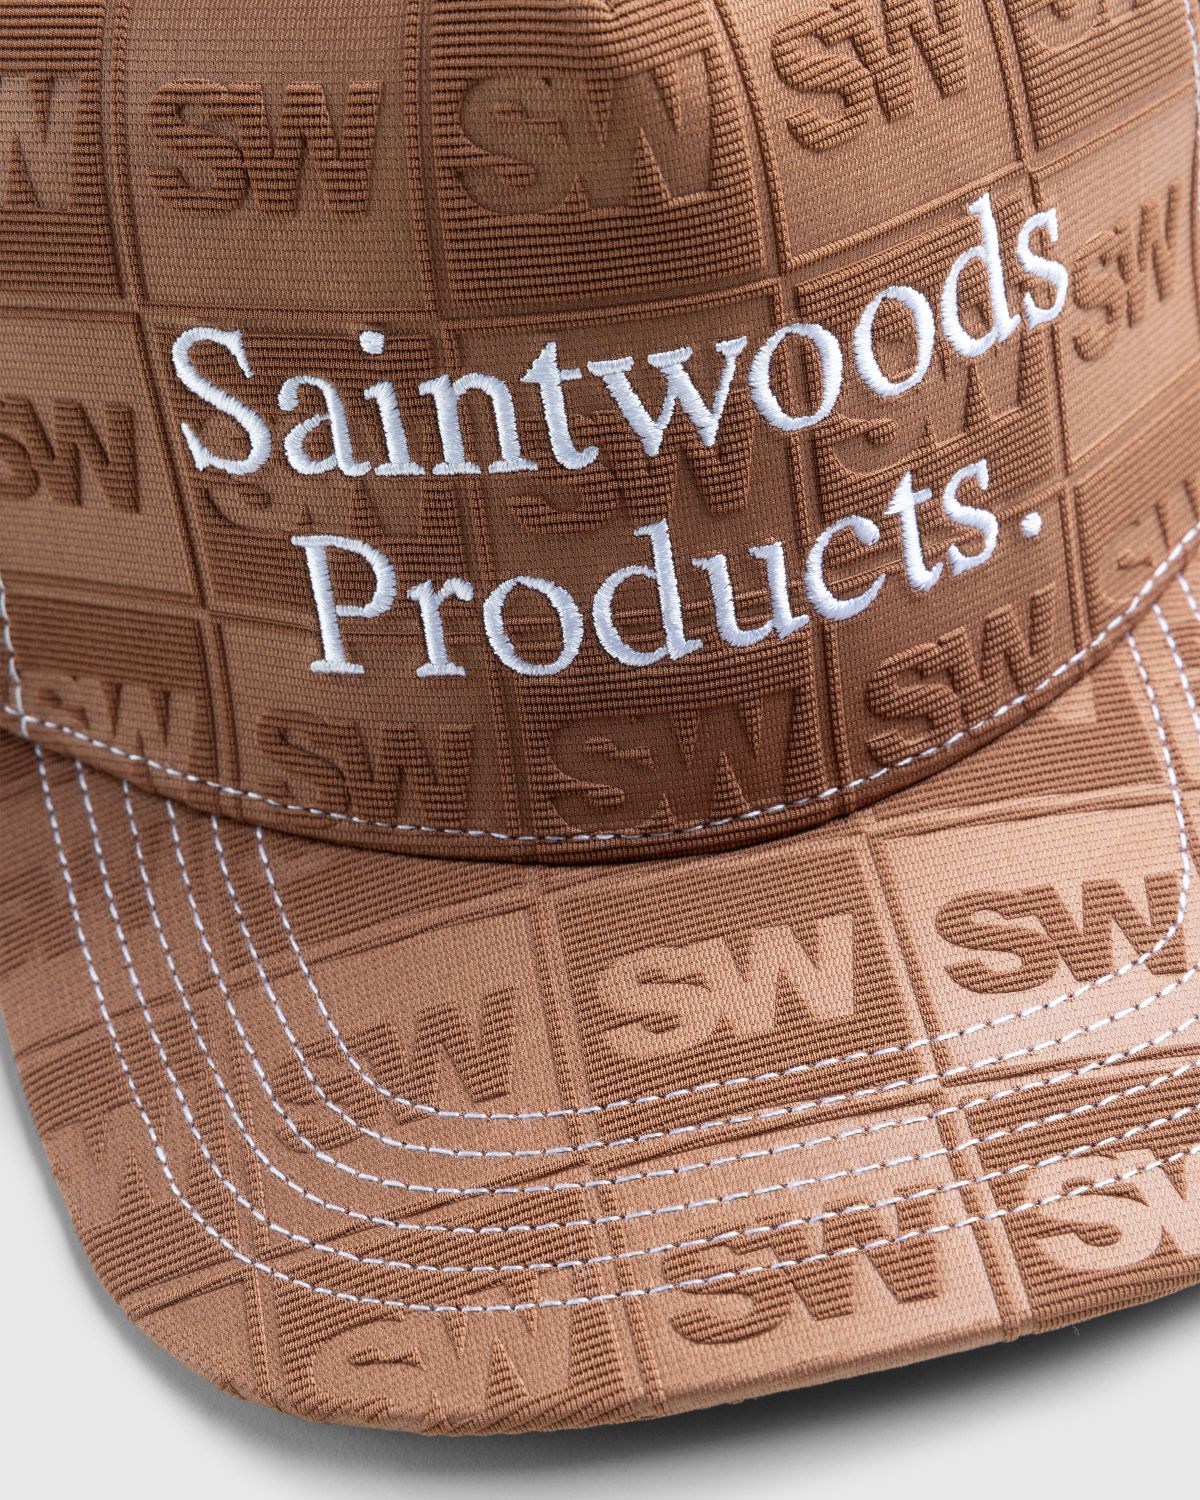 Saintwoods – SW Products Hat Brown | Highsnobiety Shop